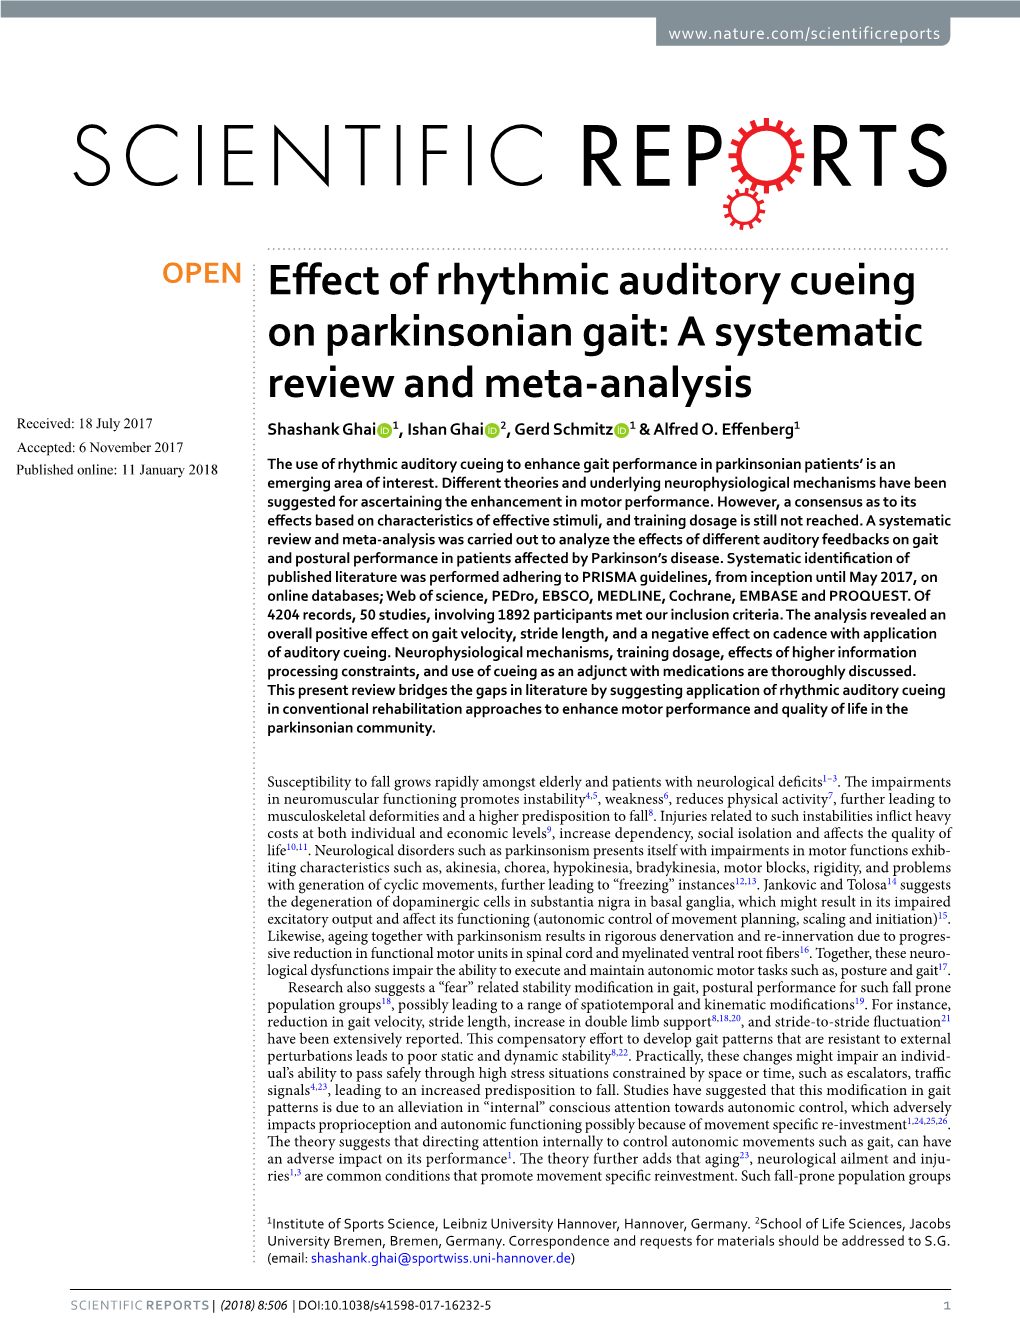 Effect of Rhythmic Auditory Cueing on Parkinsonian Gait